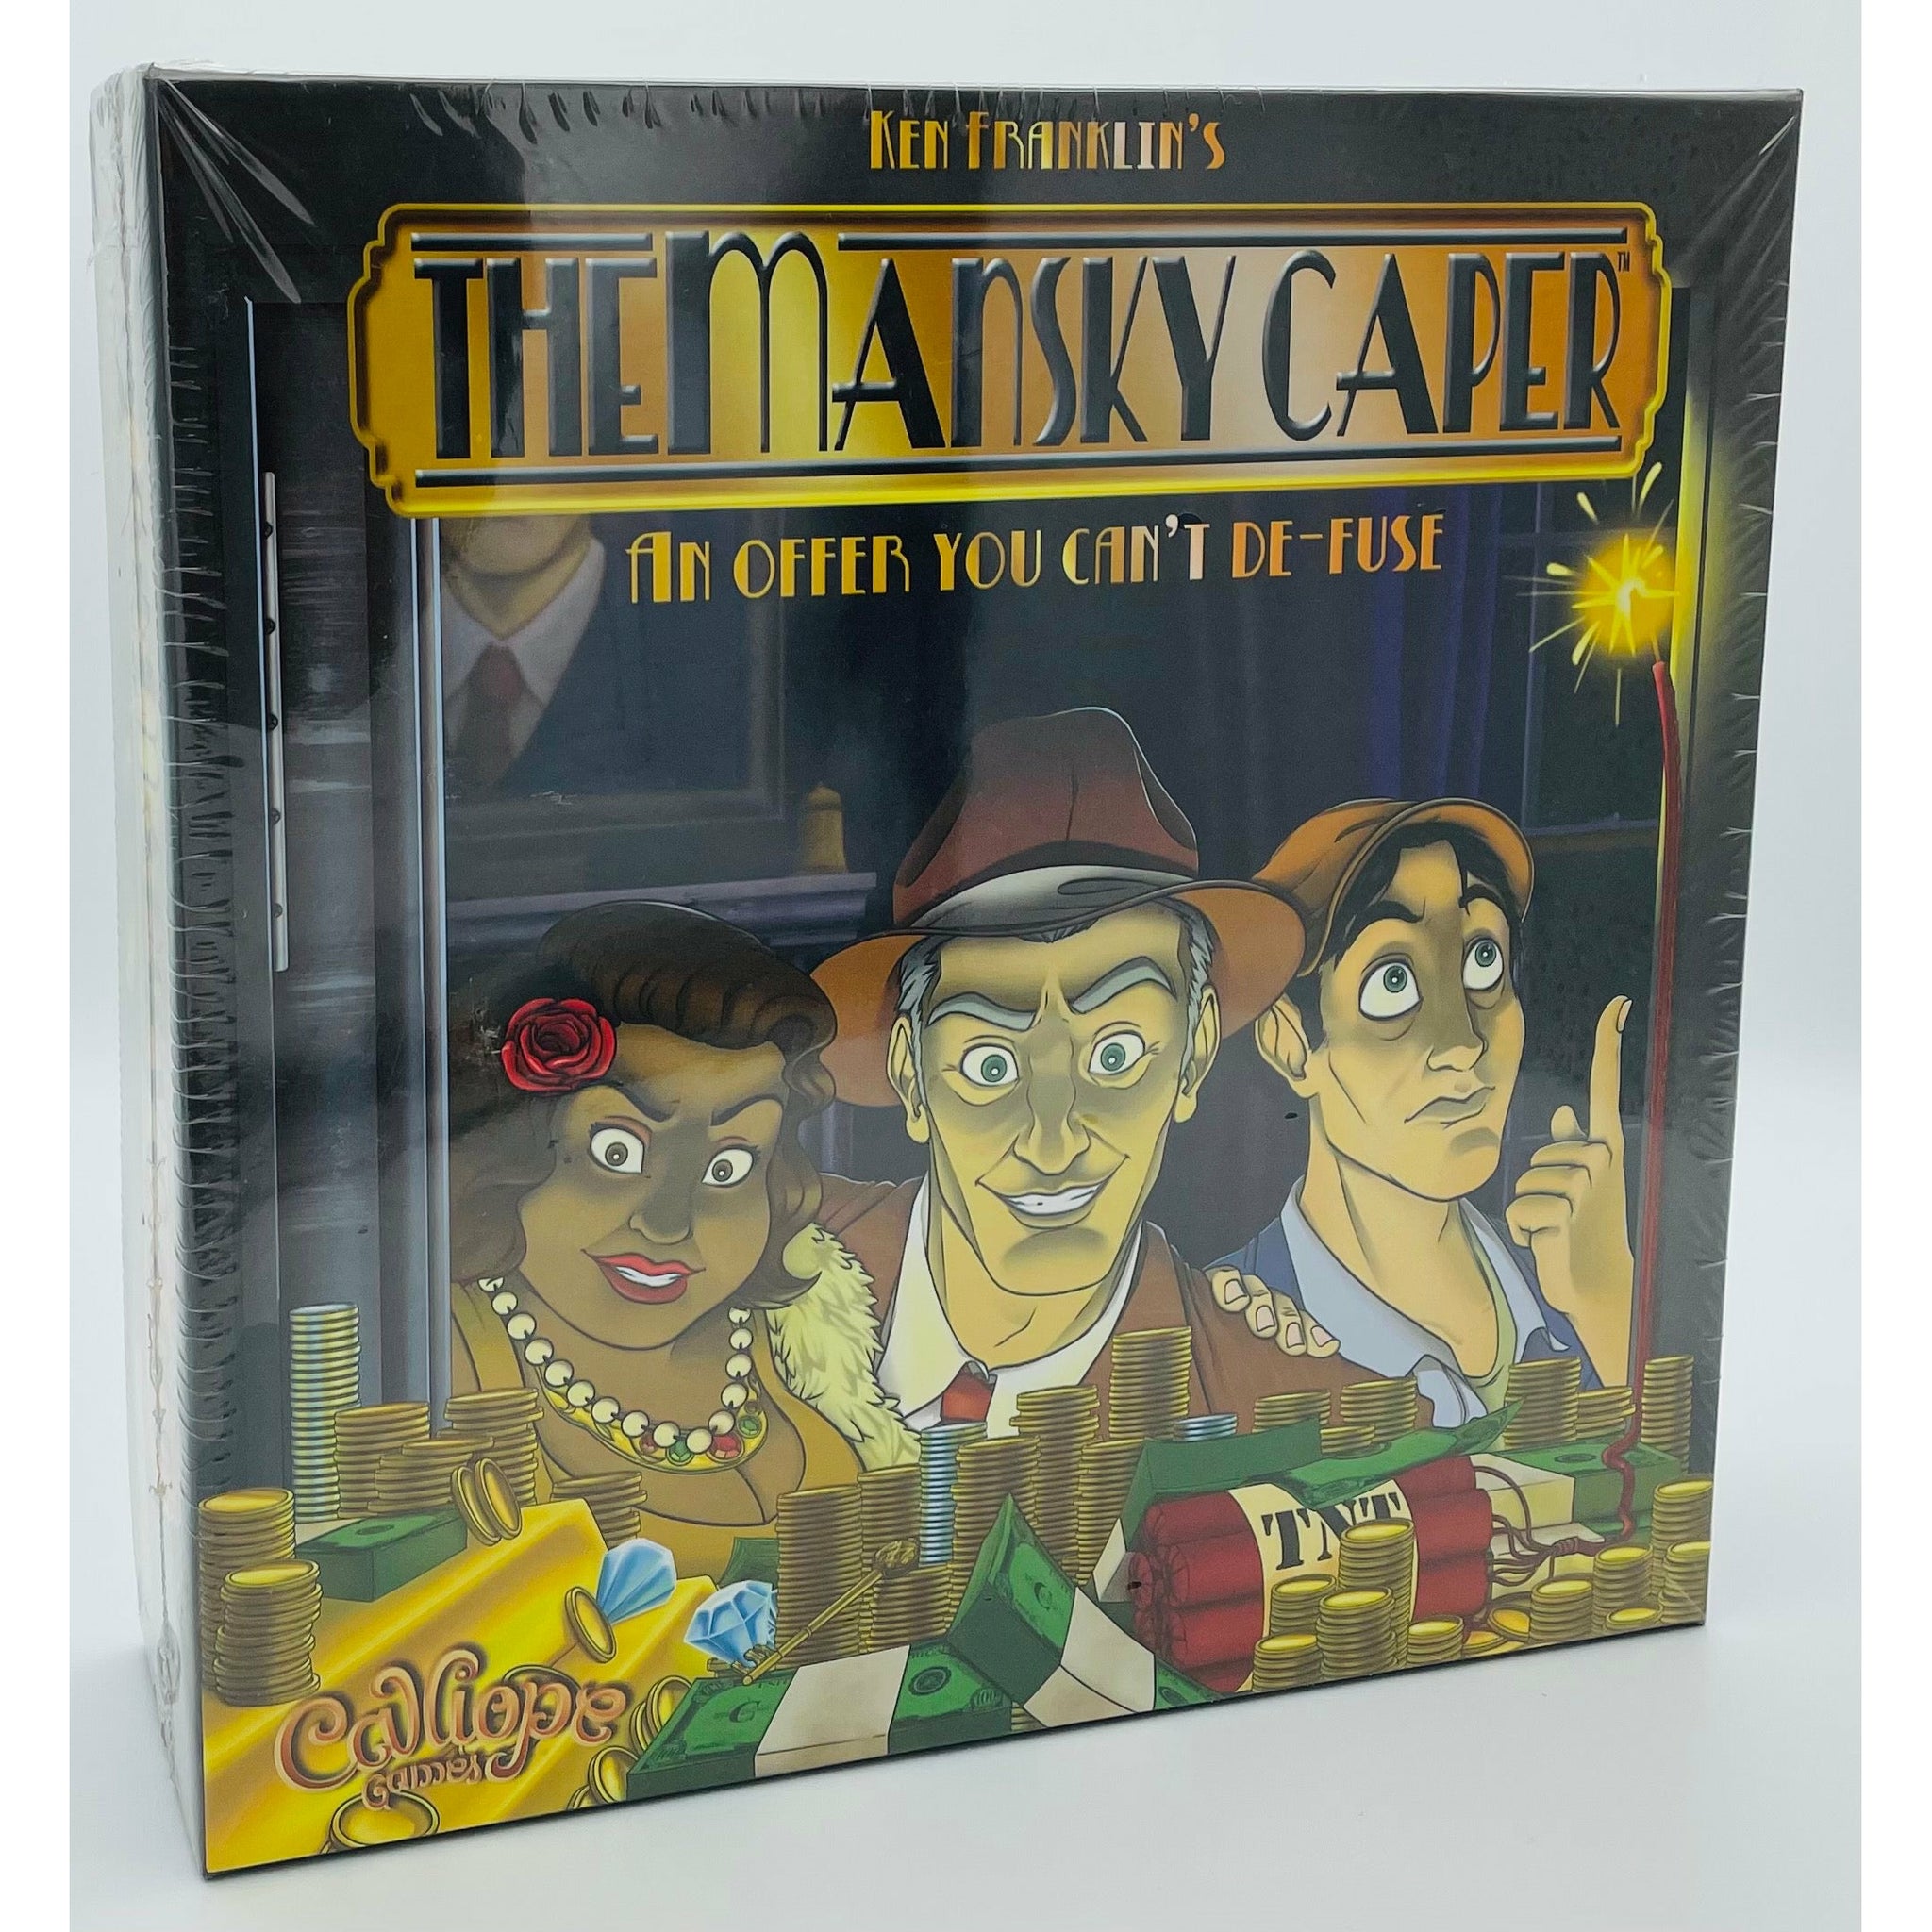 The Mansky Caper Board Game - Calliope Games - New in Sealed Box